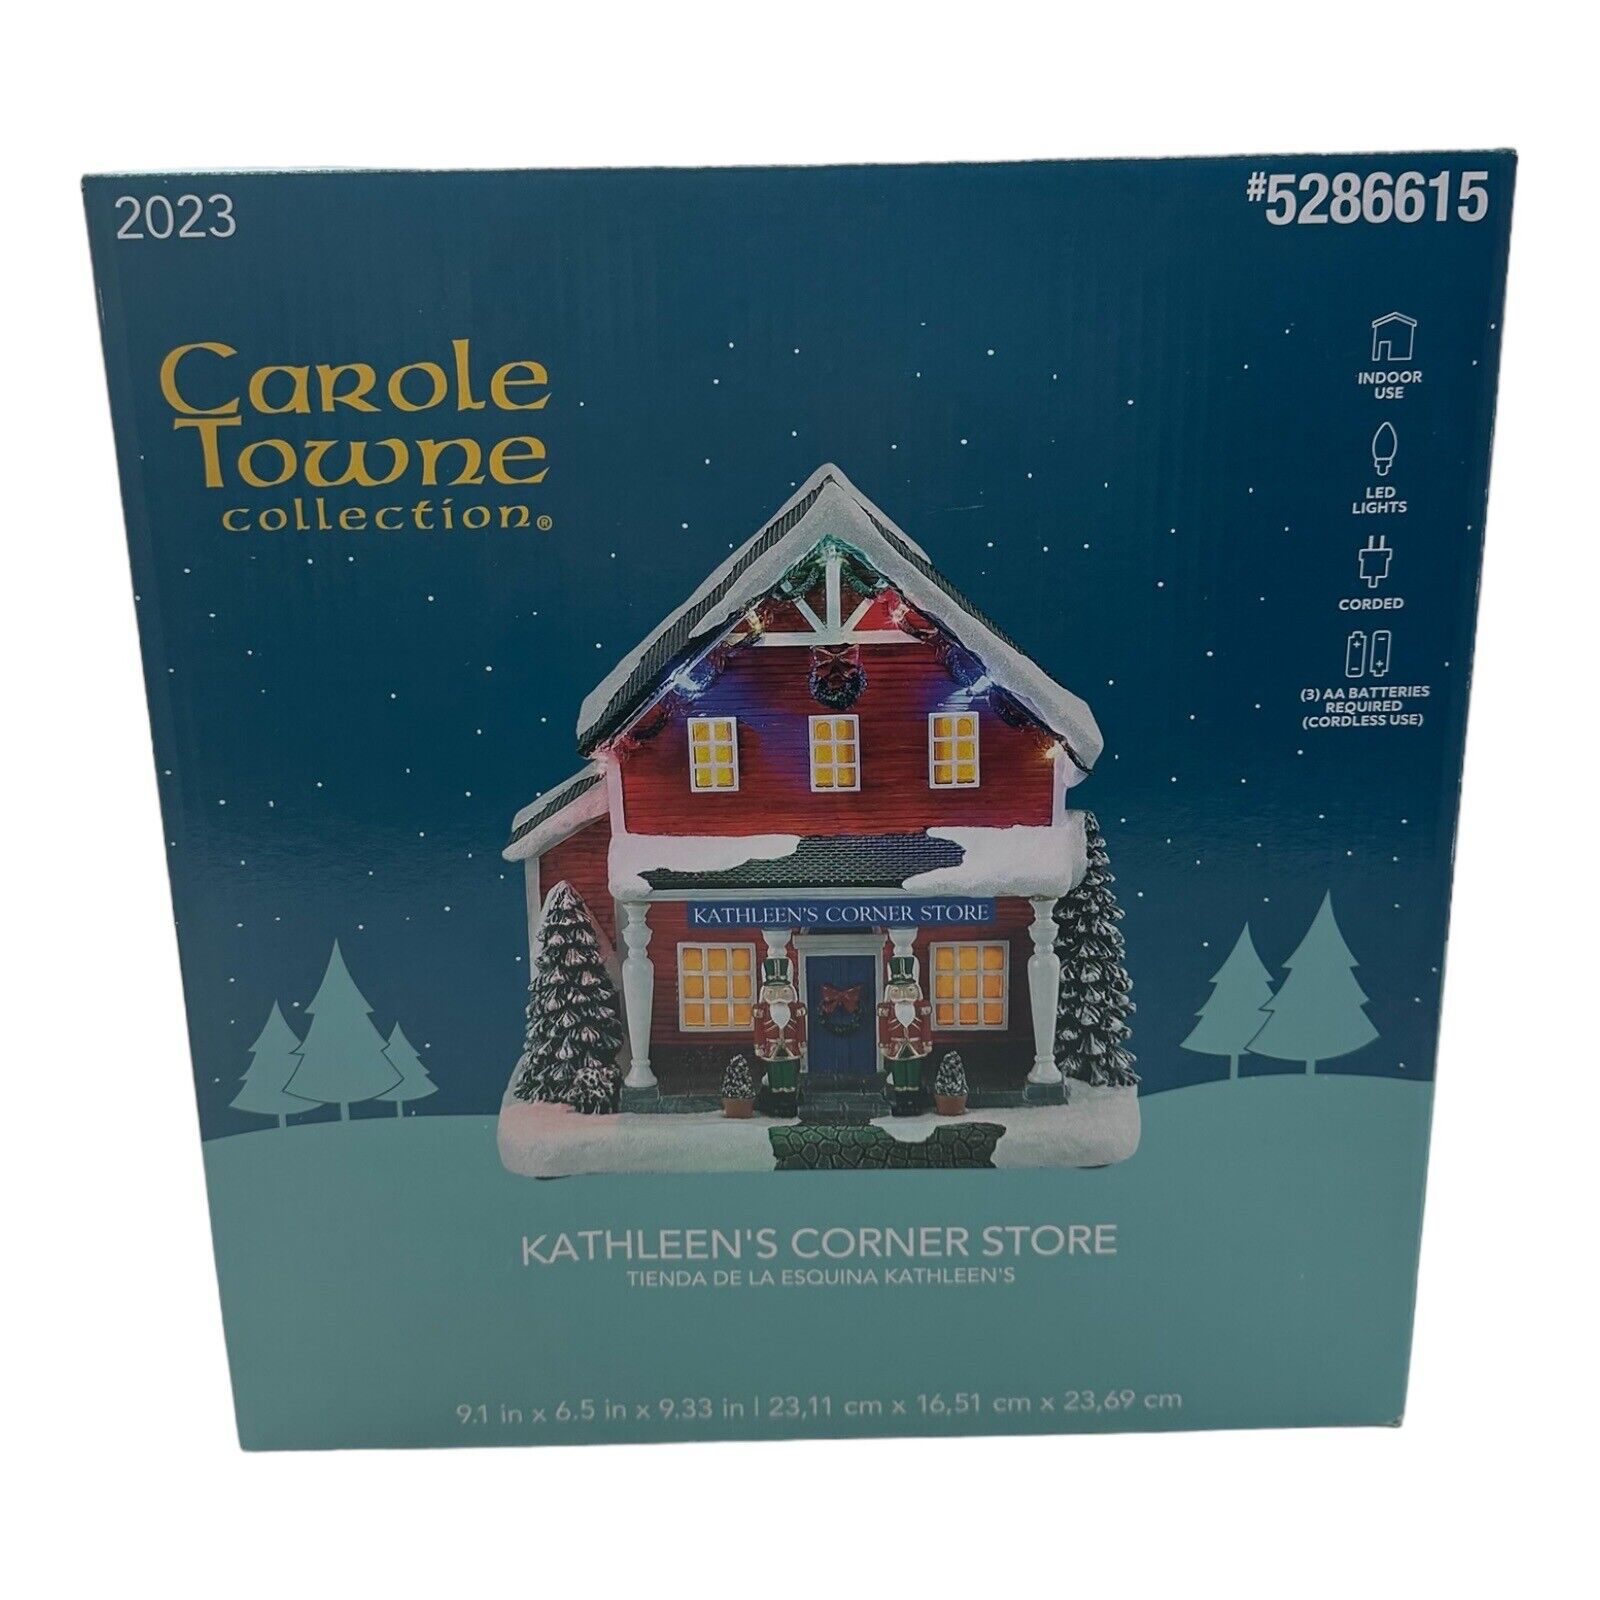 2023 Carole Towne Kathleen's Corner Store Christmas Village NEW IN BOX